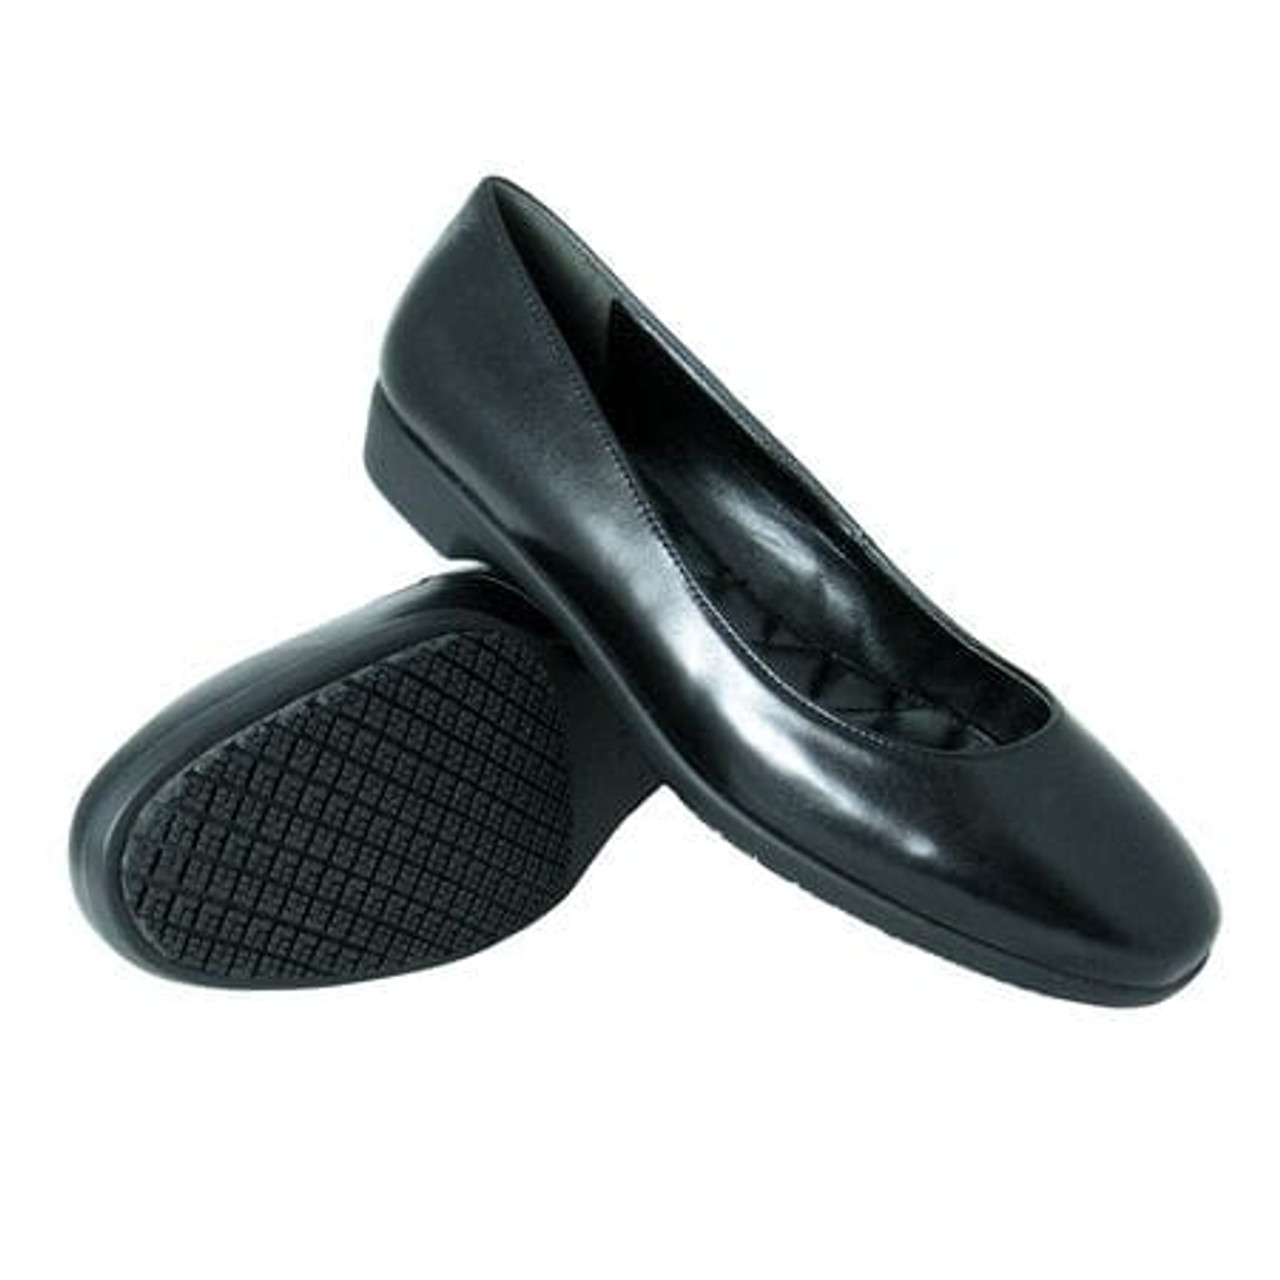 stylish slip resistant shoes womens